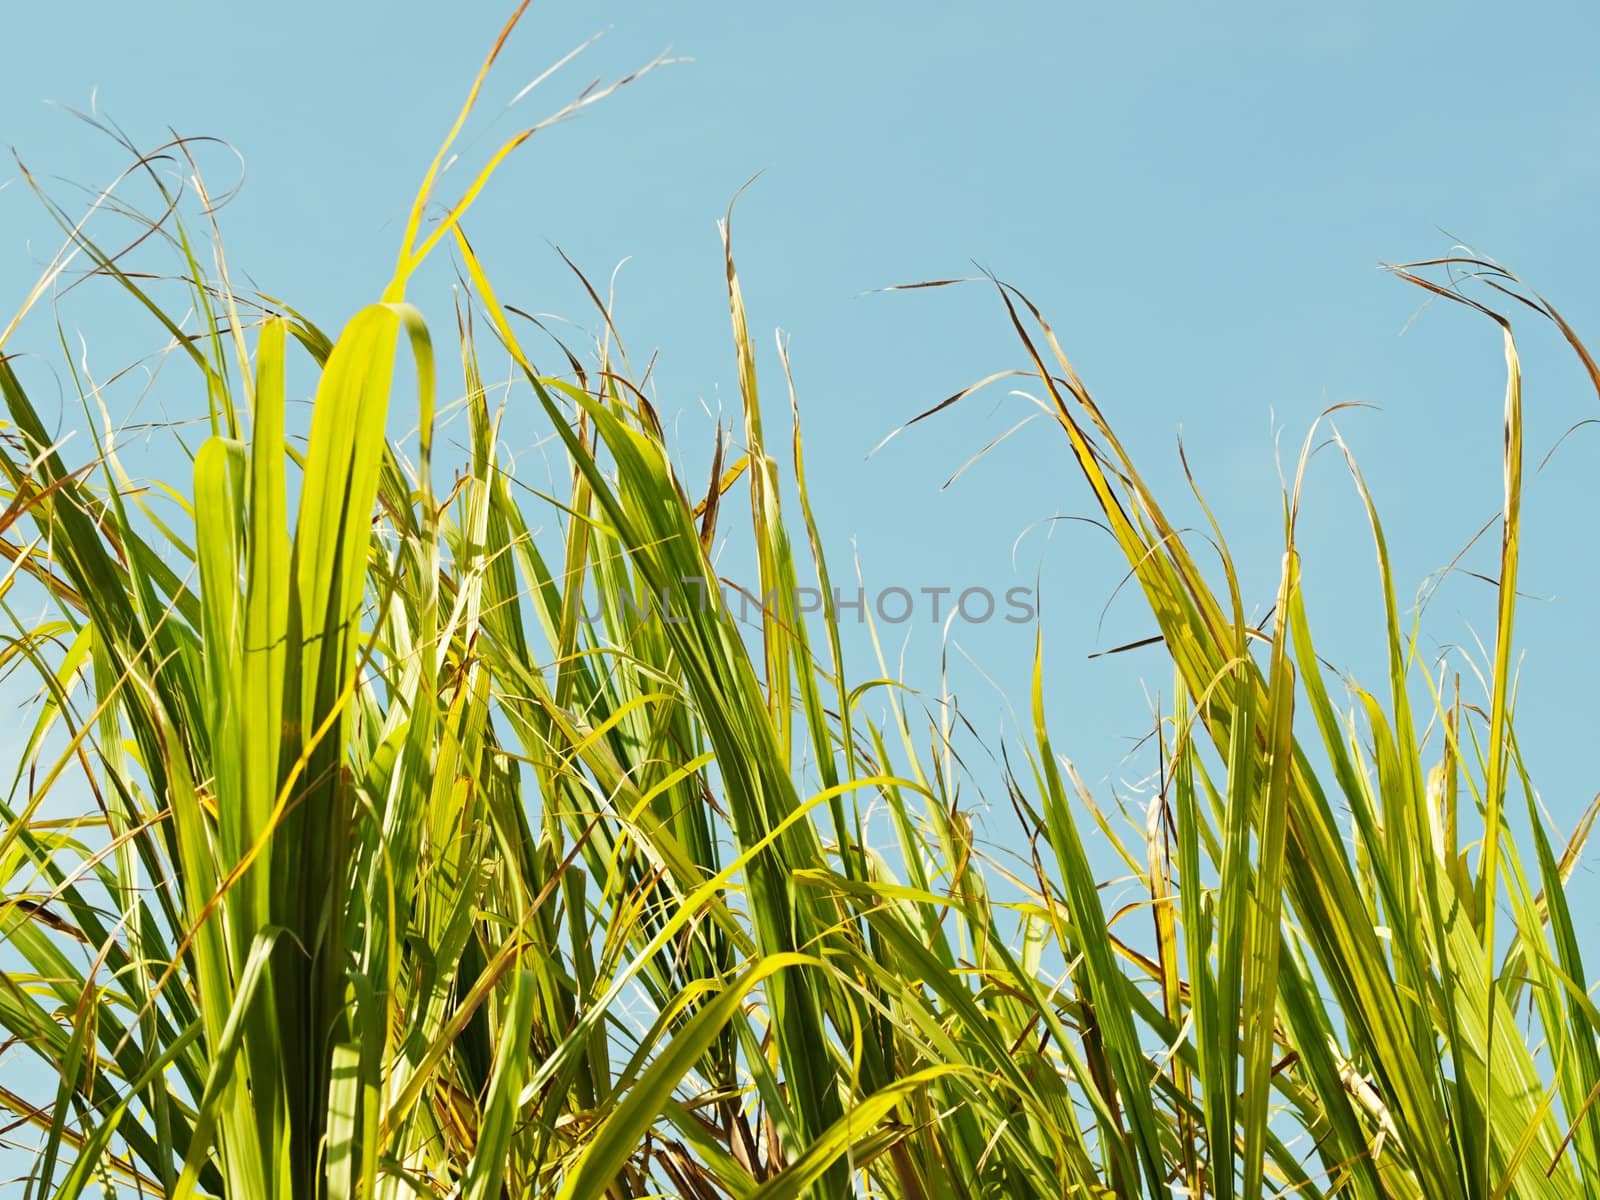 Grass sugar cane tops against blue sky by sherj